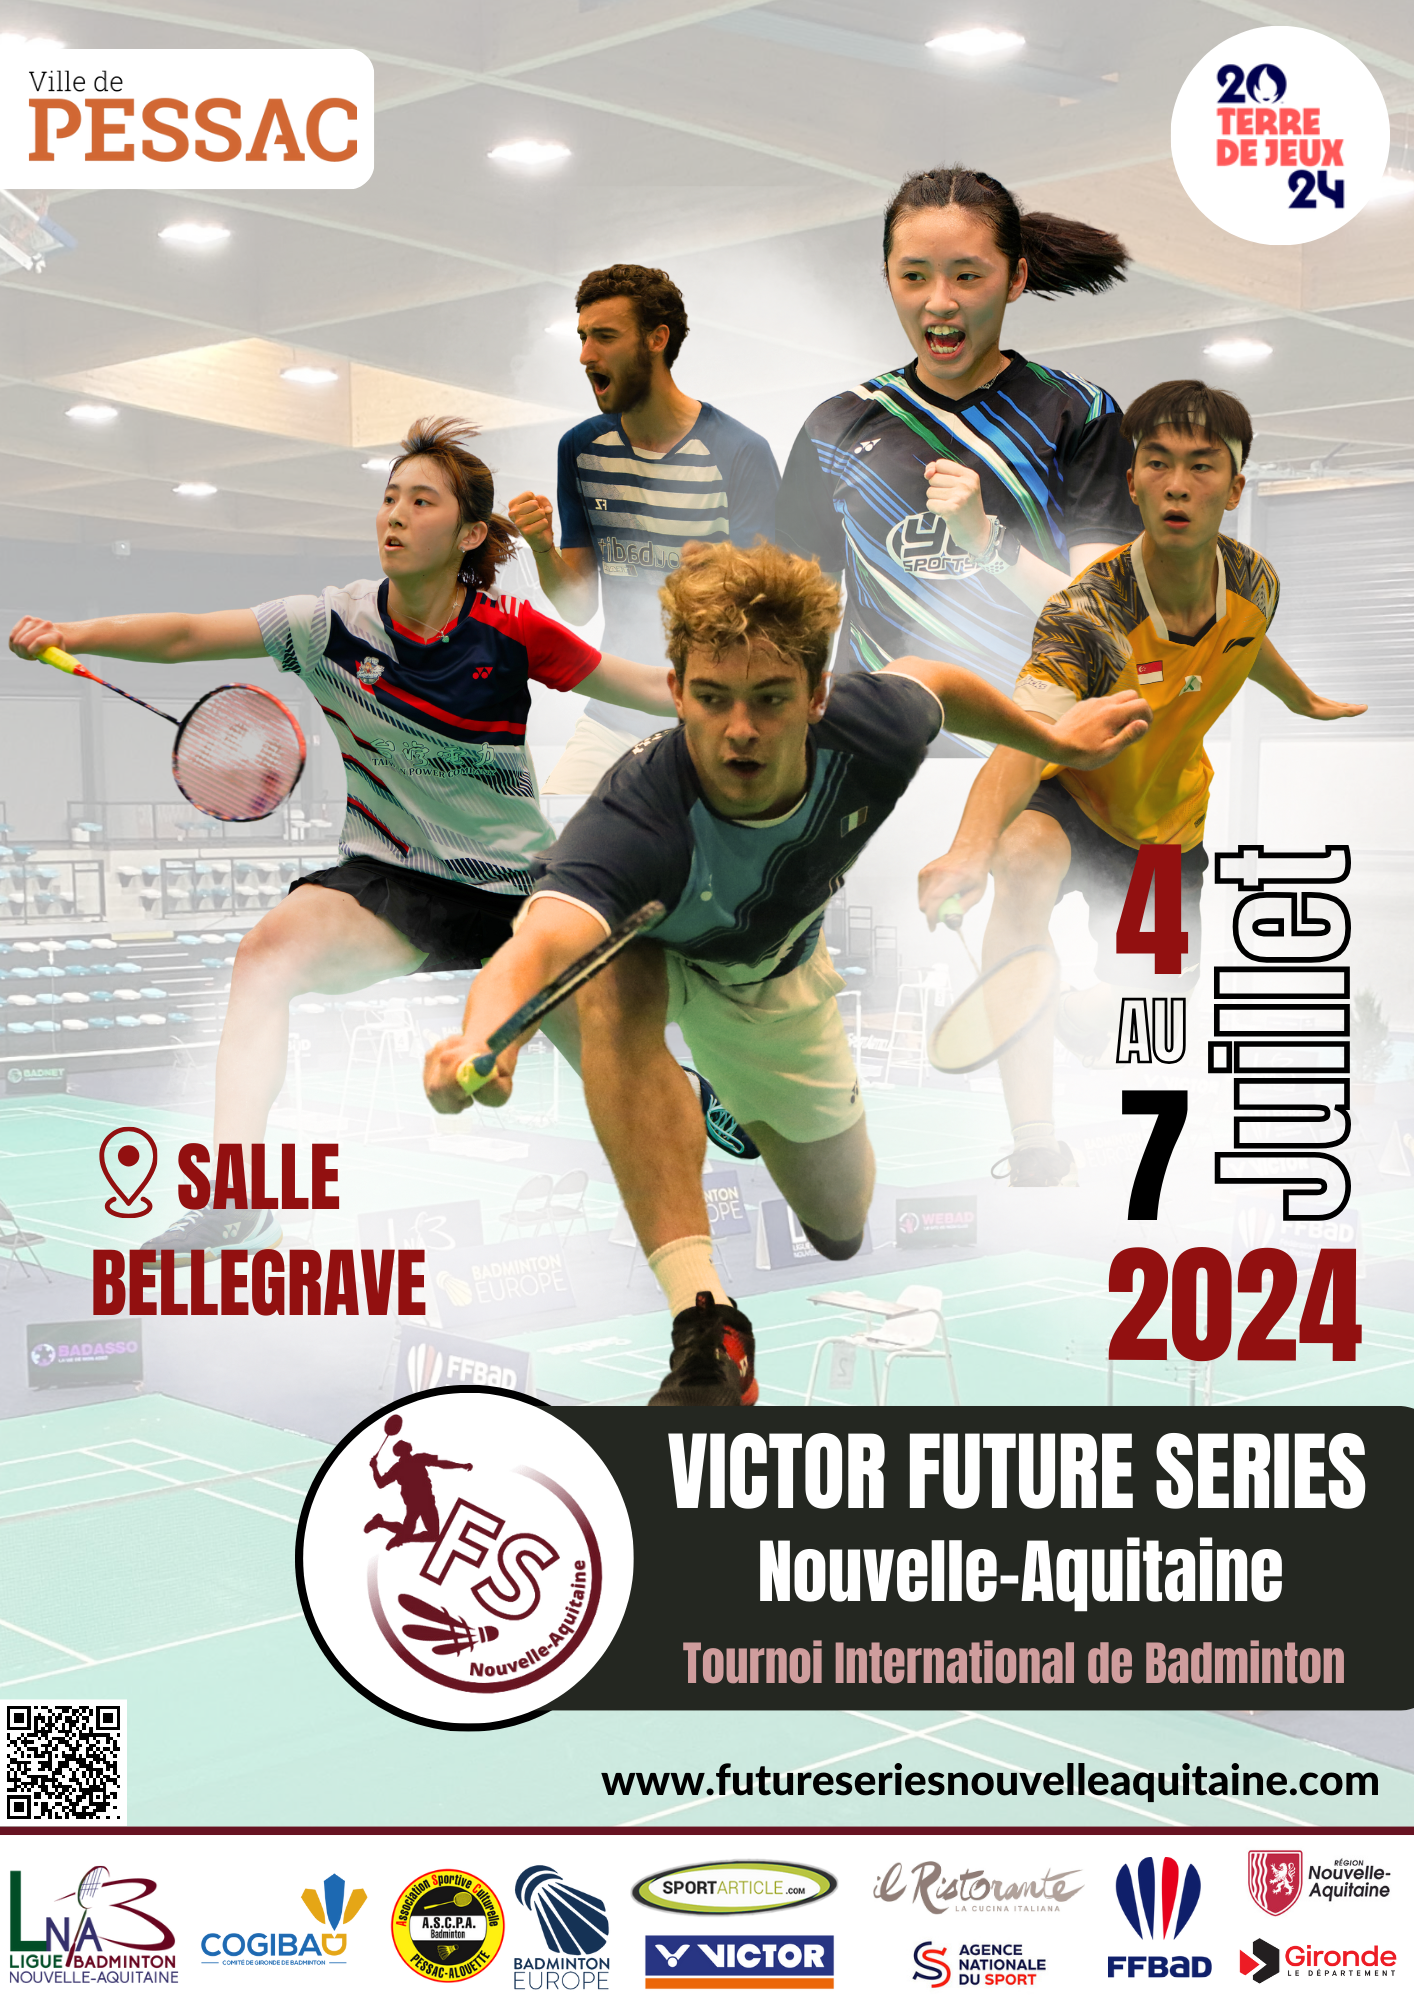 Victor Future Series Nouvelle-Aquitaine